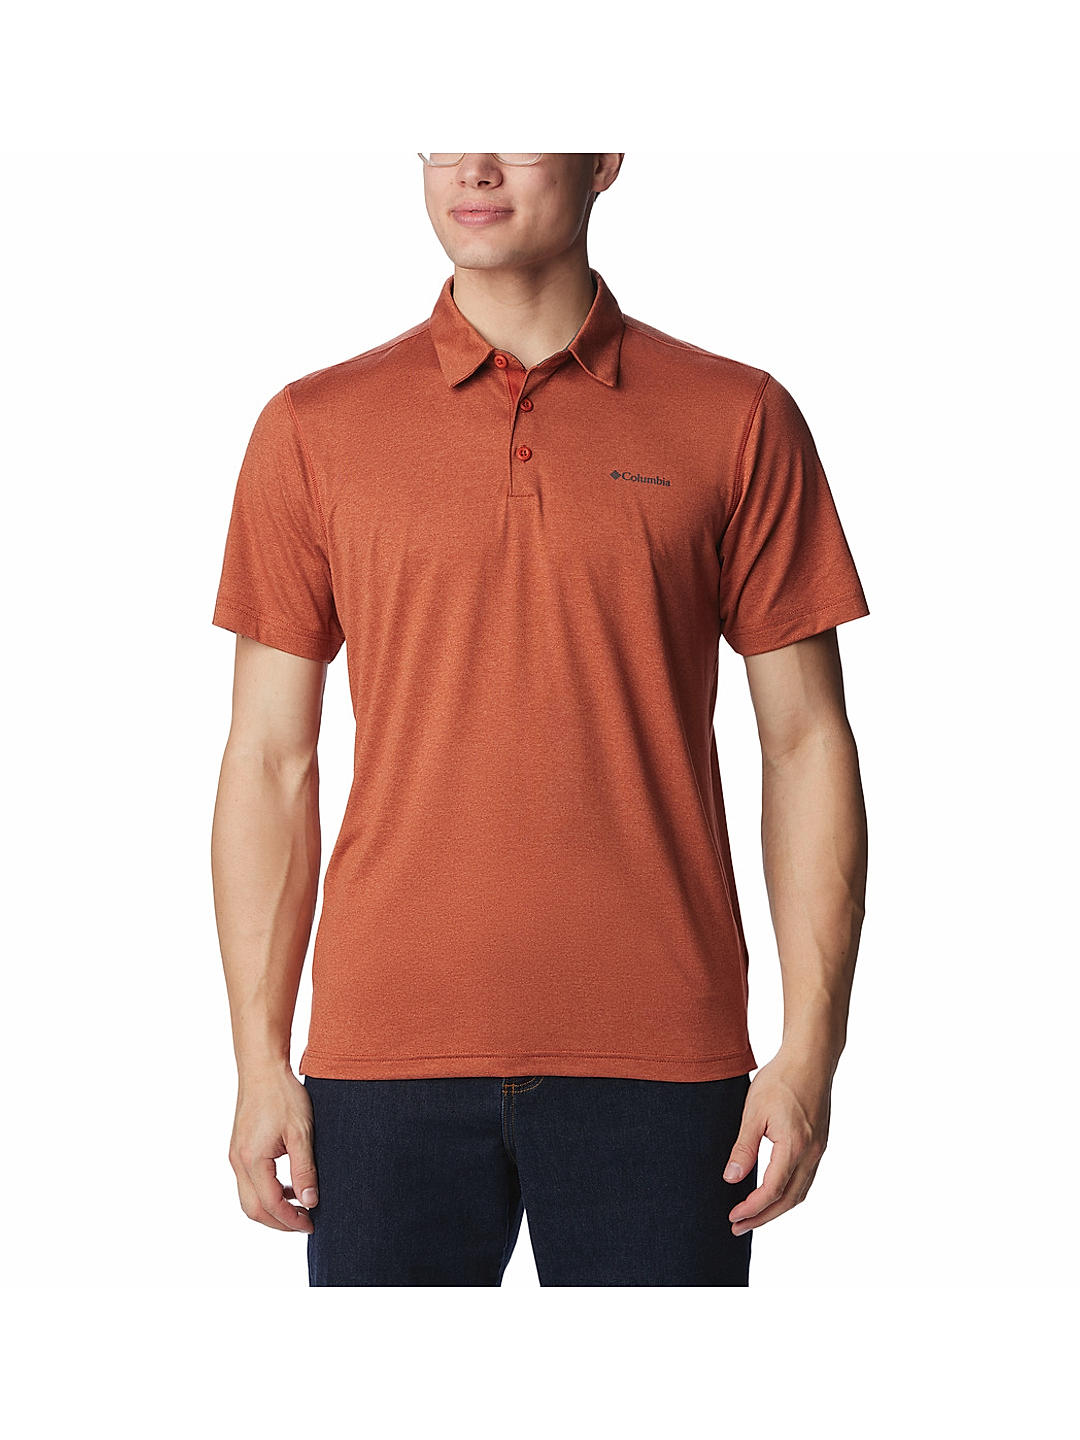 Buy Orange Tech Trail Polo T-shirts for Men Online at Columbia Sportswear